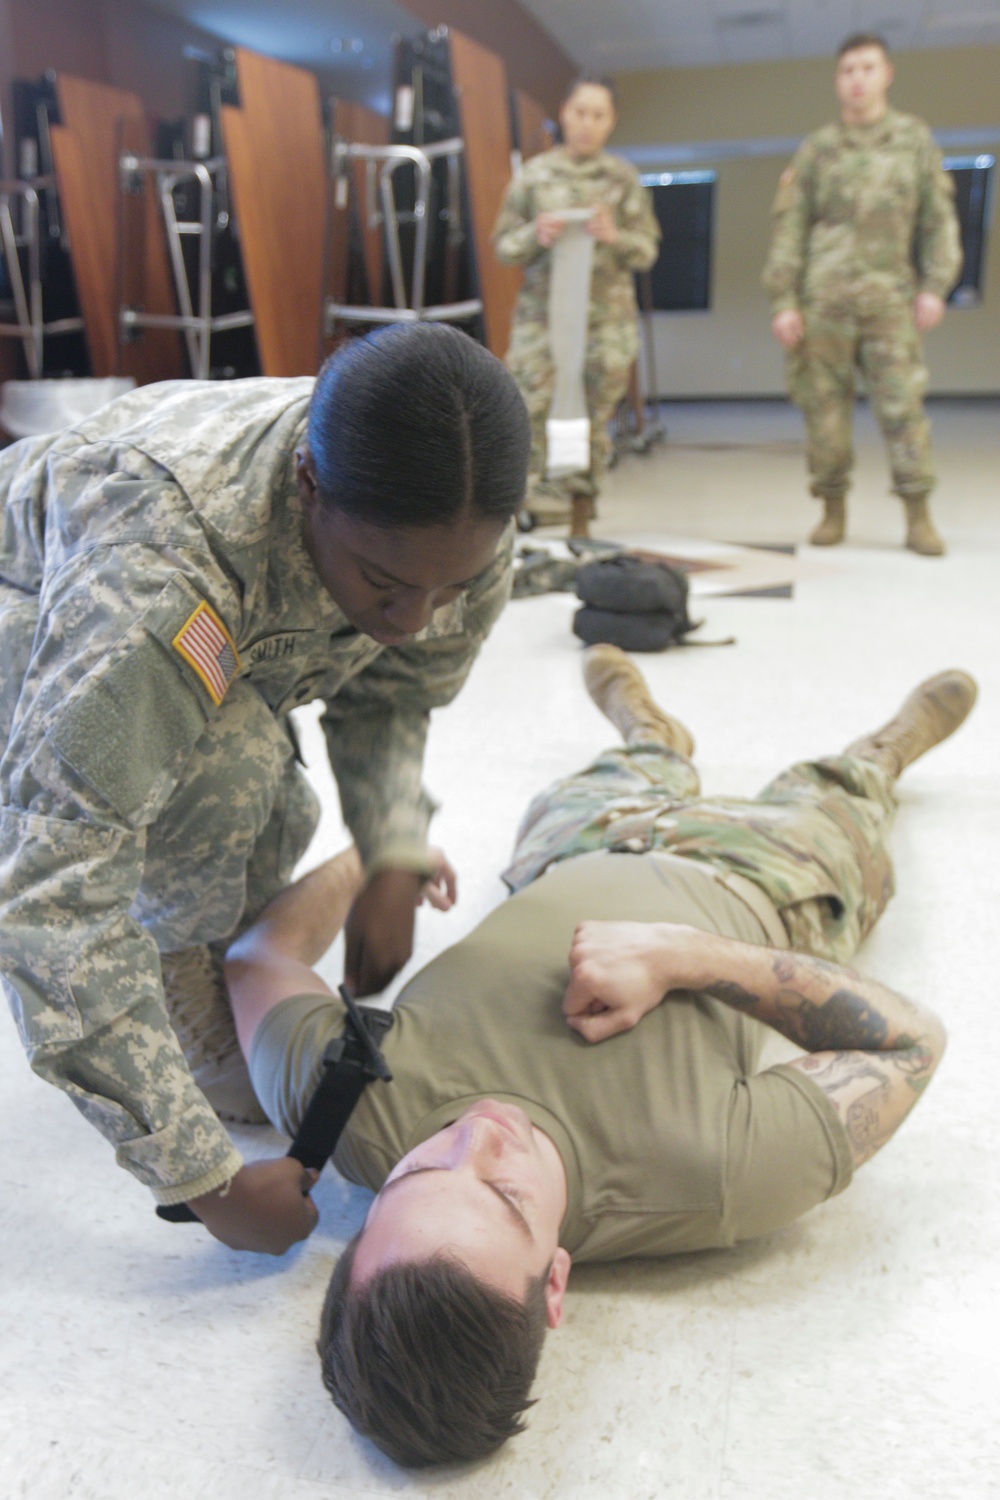 210th MPAD Readiness Training